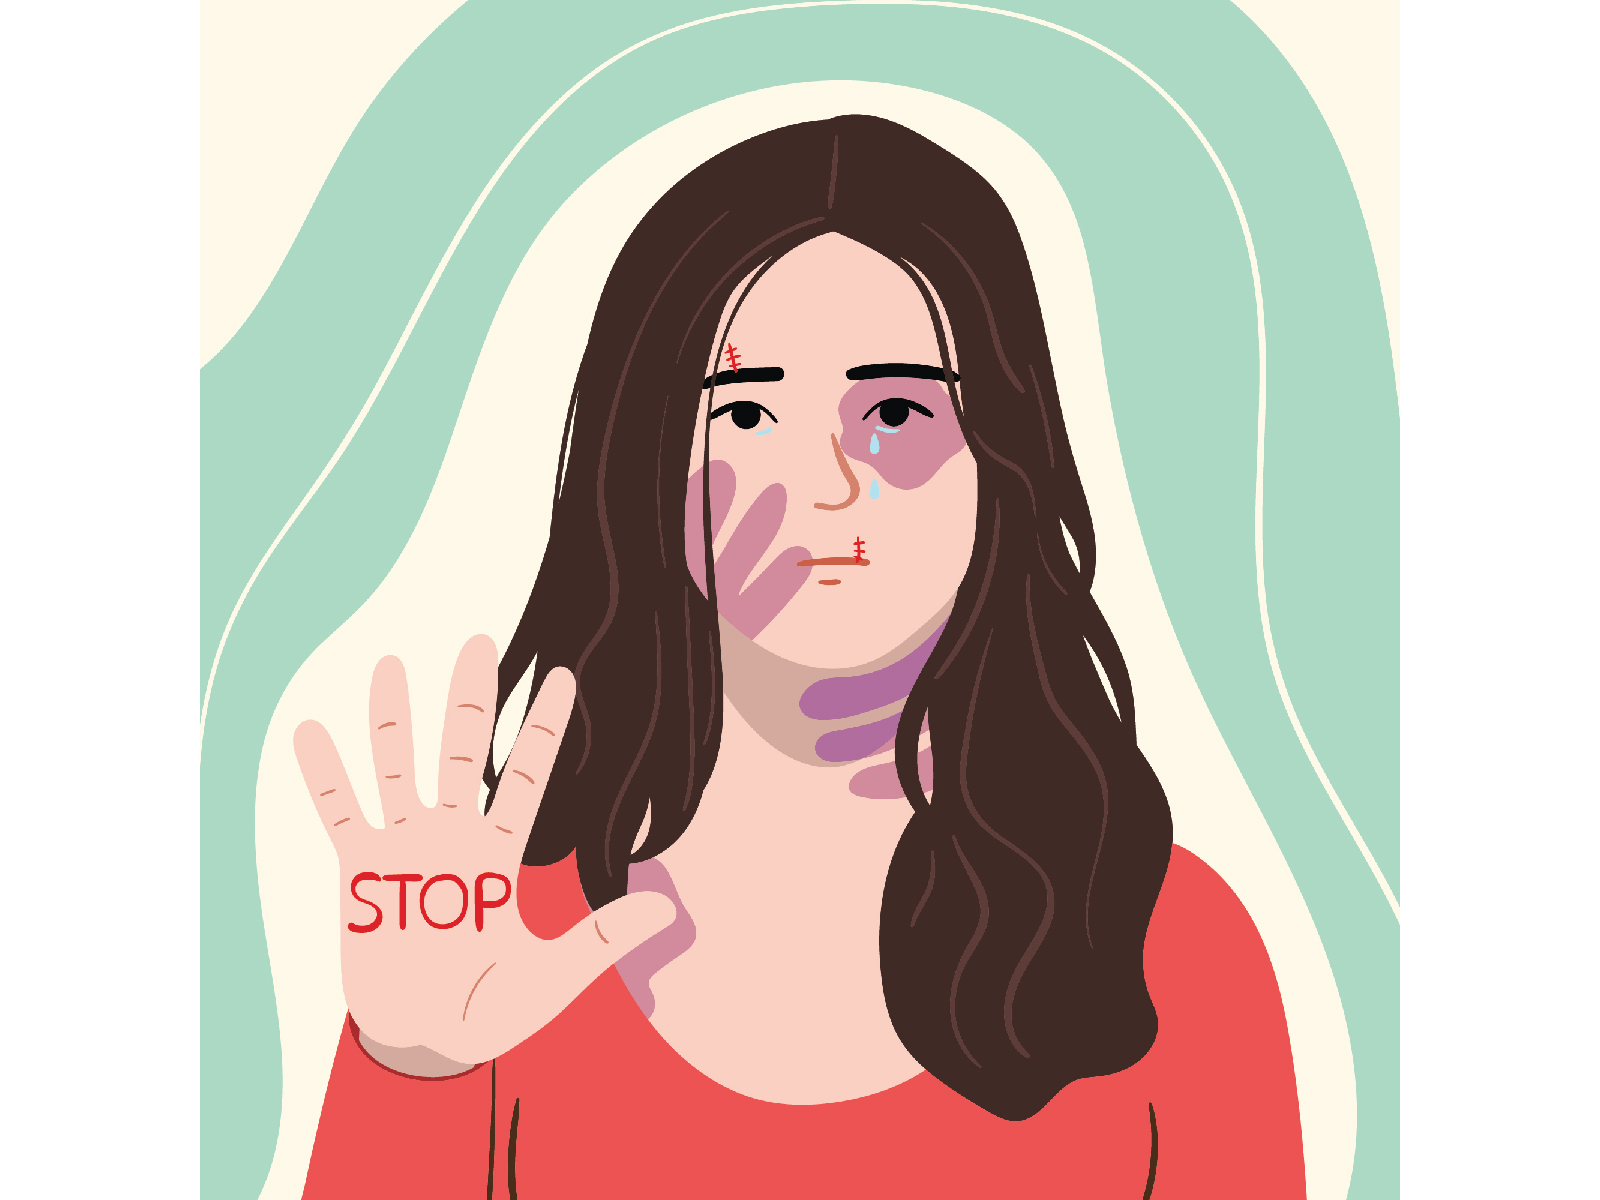 Stop gender violence illustration by Adam Dana on Dribbble